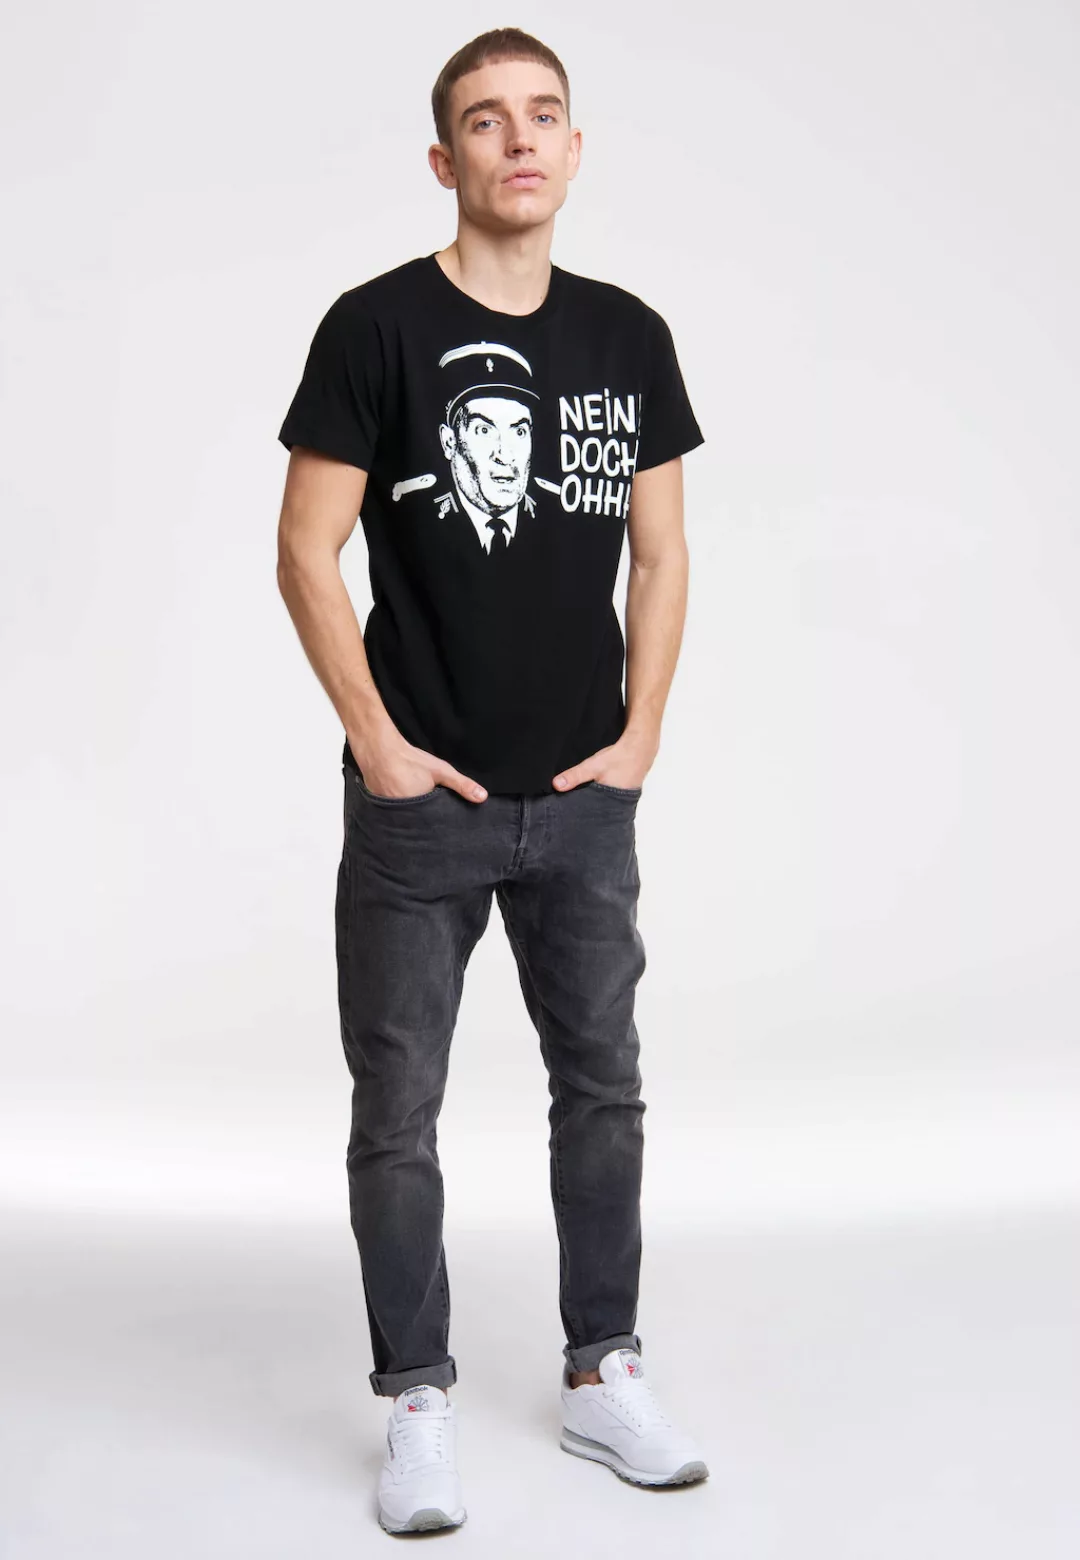 LOGOSHIRT T-Shirt "Le Gendarme de Saint-Tropez - Nein Doch Ohhh", mit coole günstig online kaufen